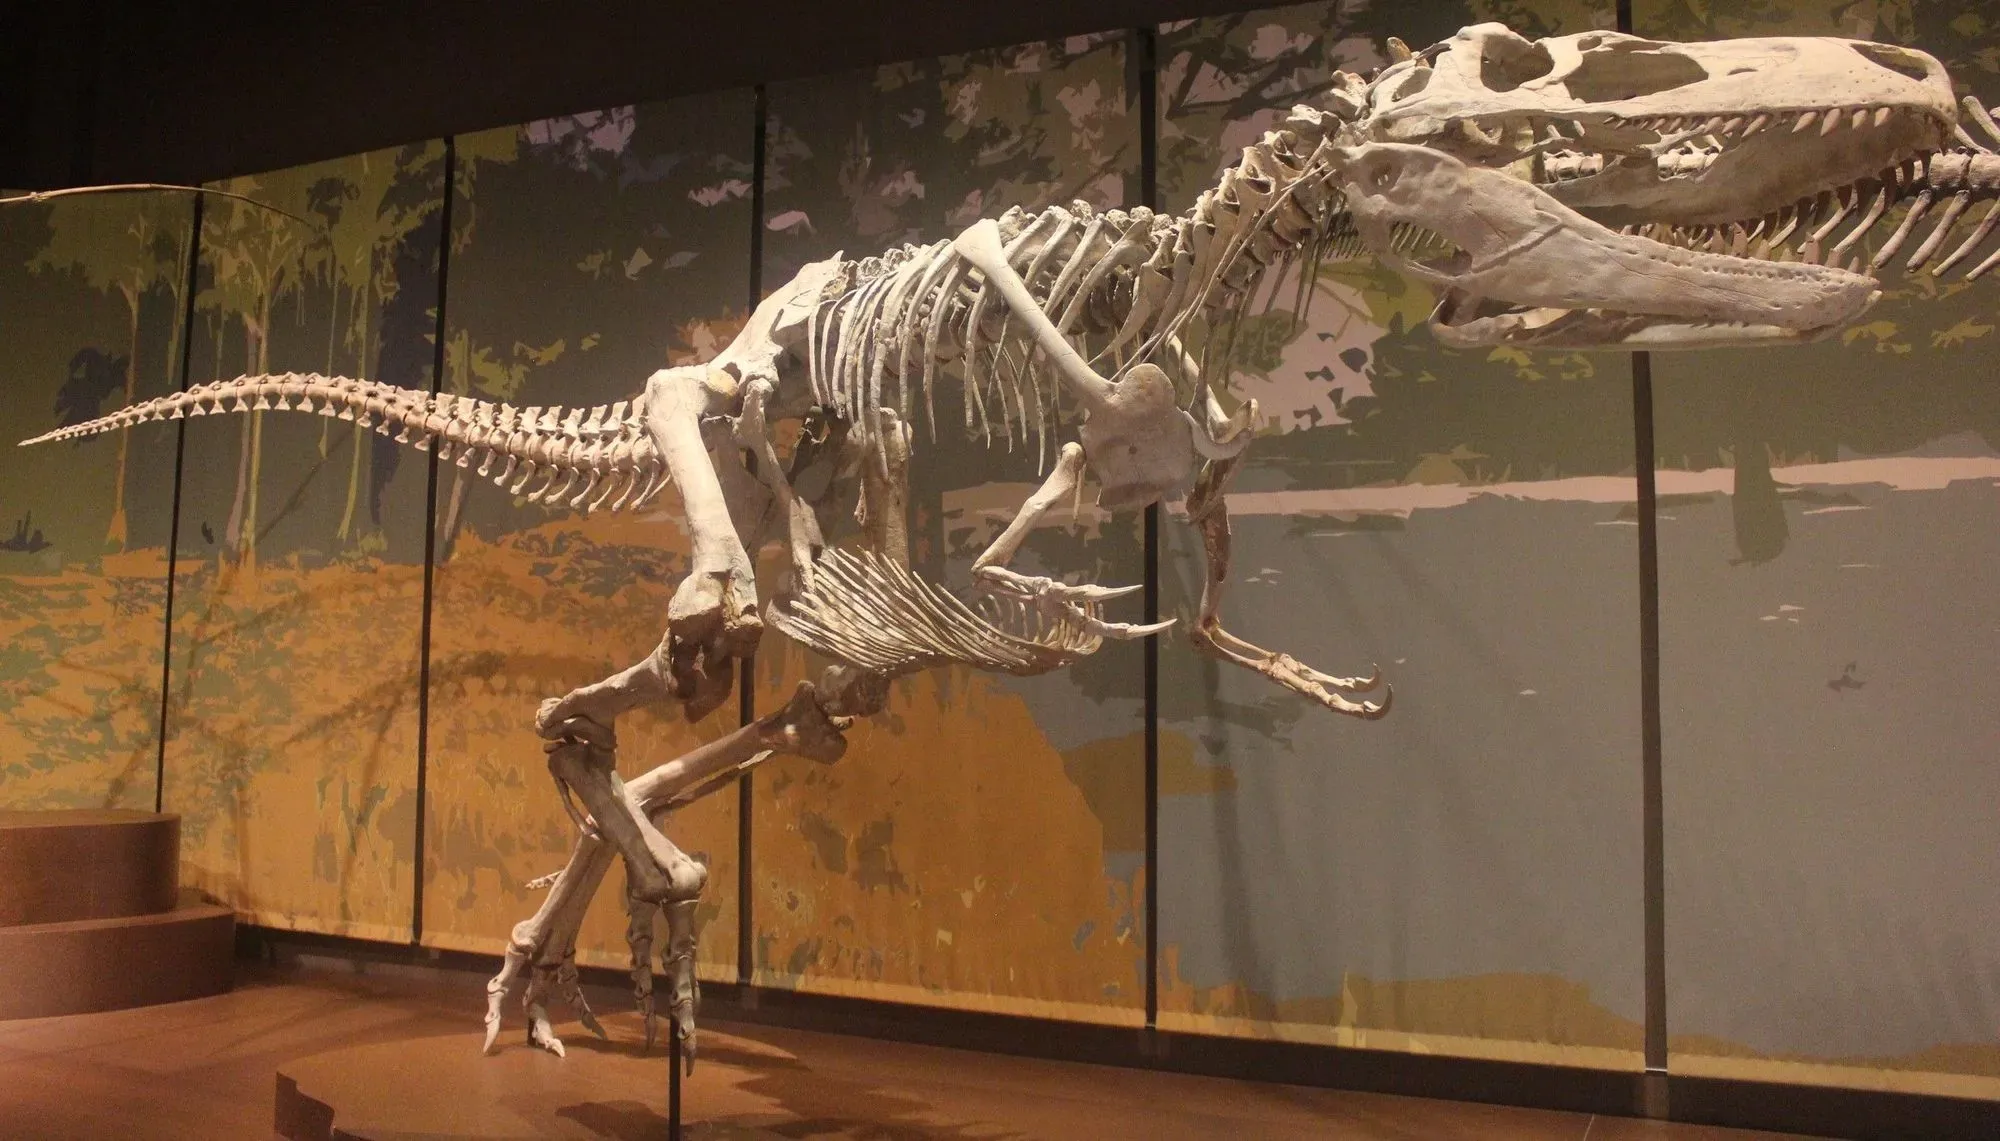 The Appalachiosaurus skull was narrow and long.